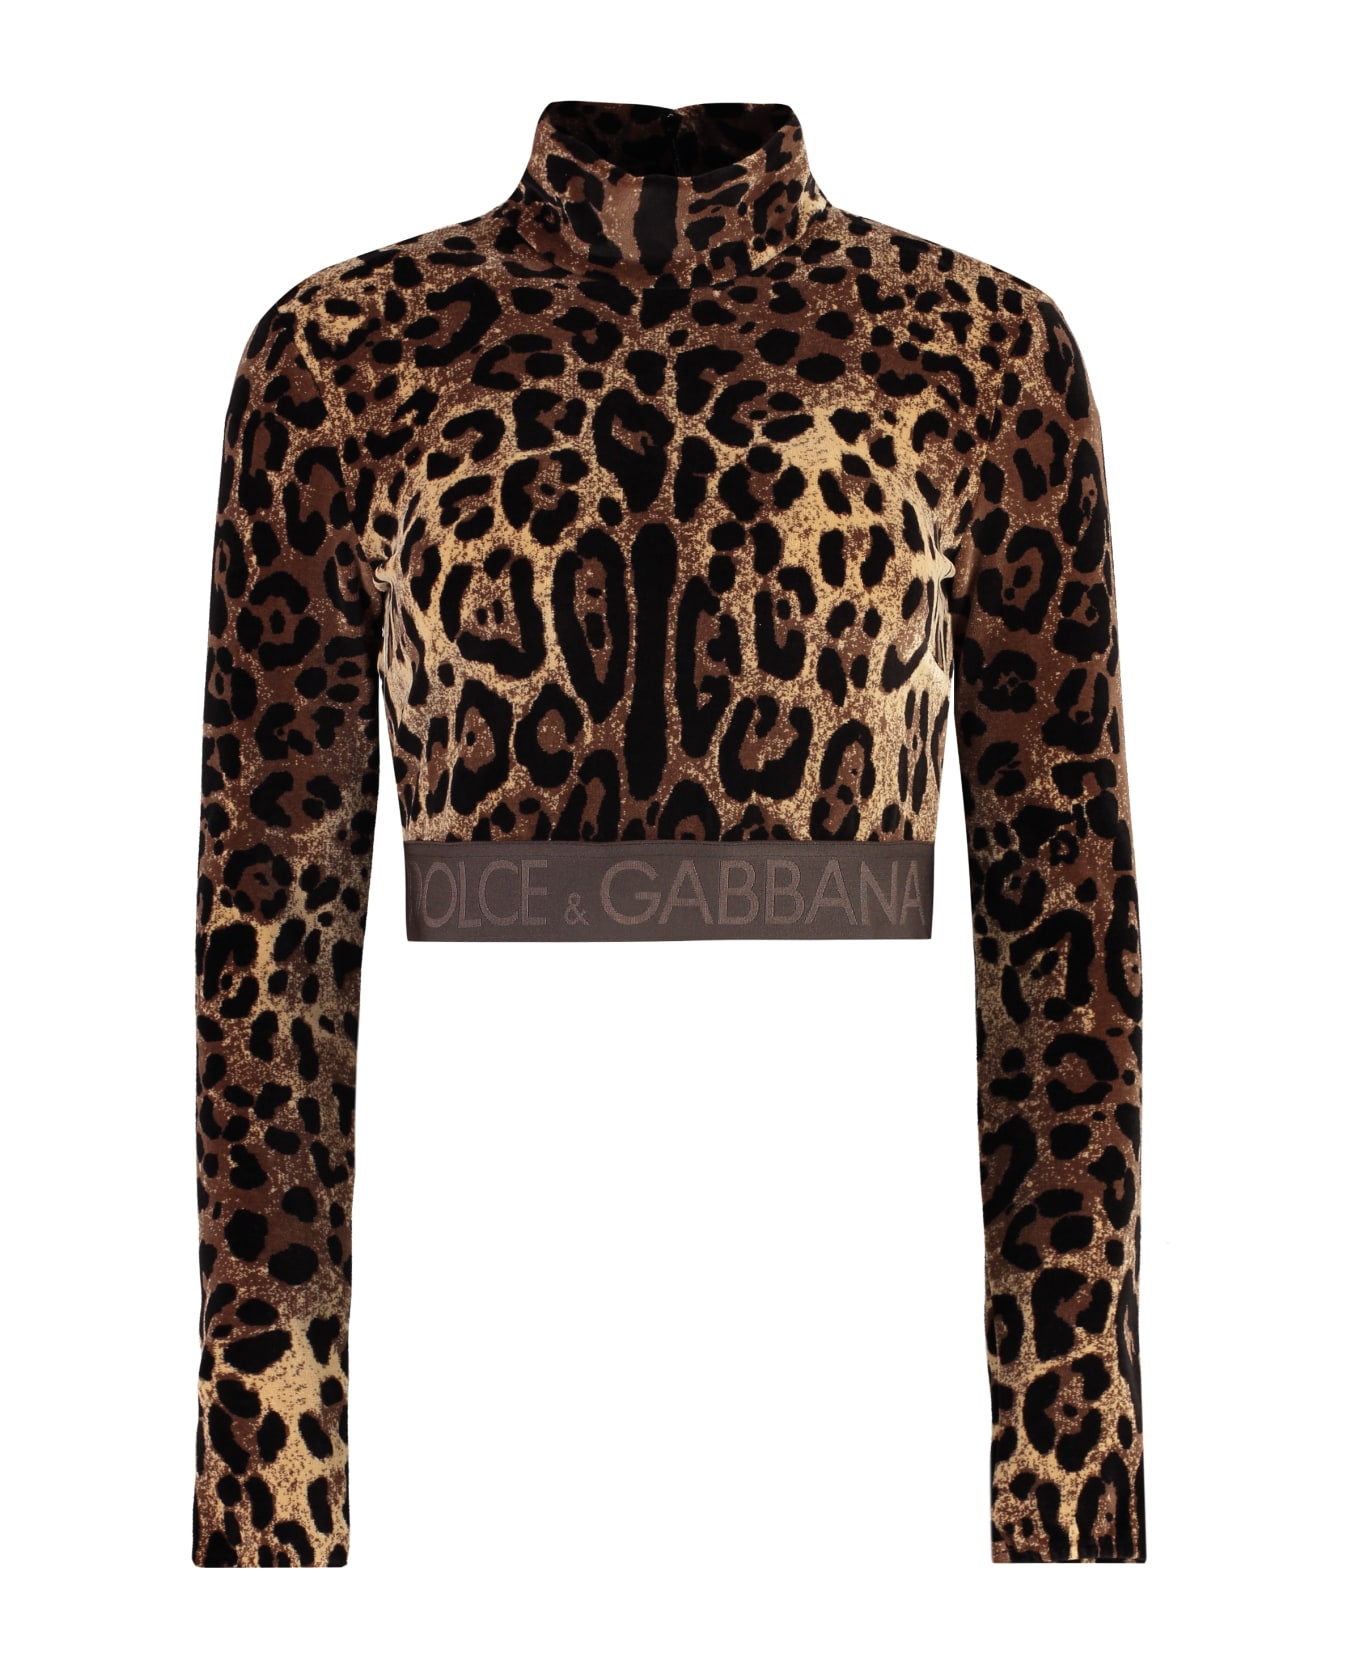 Dolce & Gabbana Long Sleeve Crop Top - Animalier